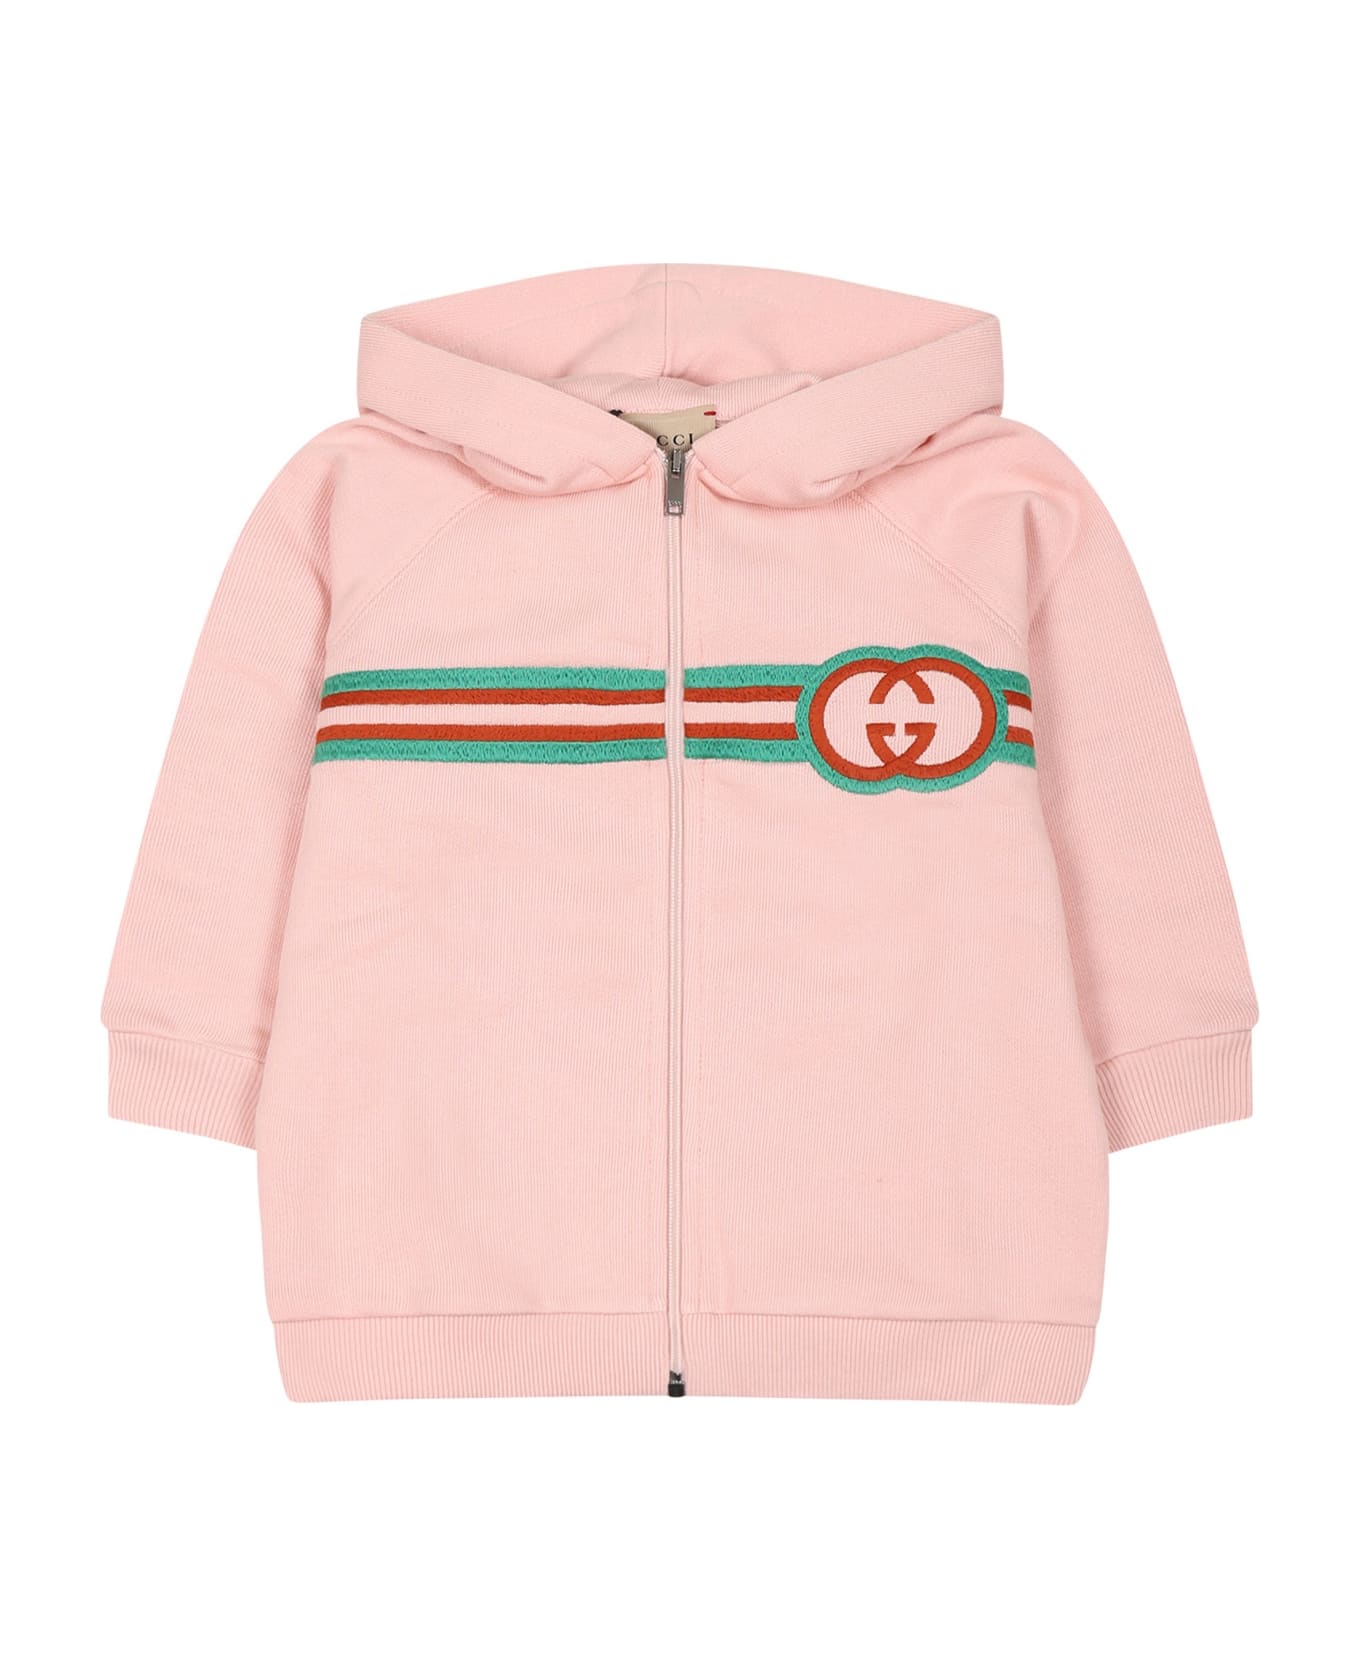 Gucci Pink Sweatshirt For Baby Girl With Interlocking Gg - Pink